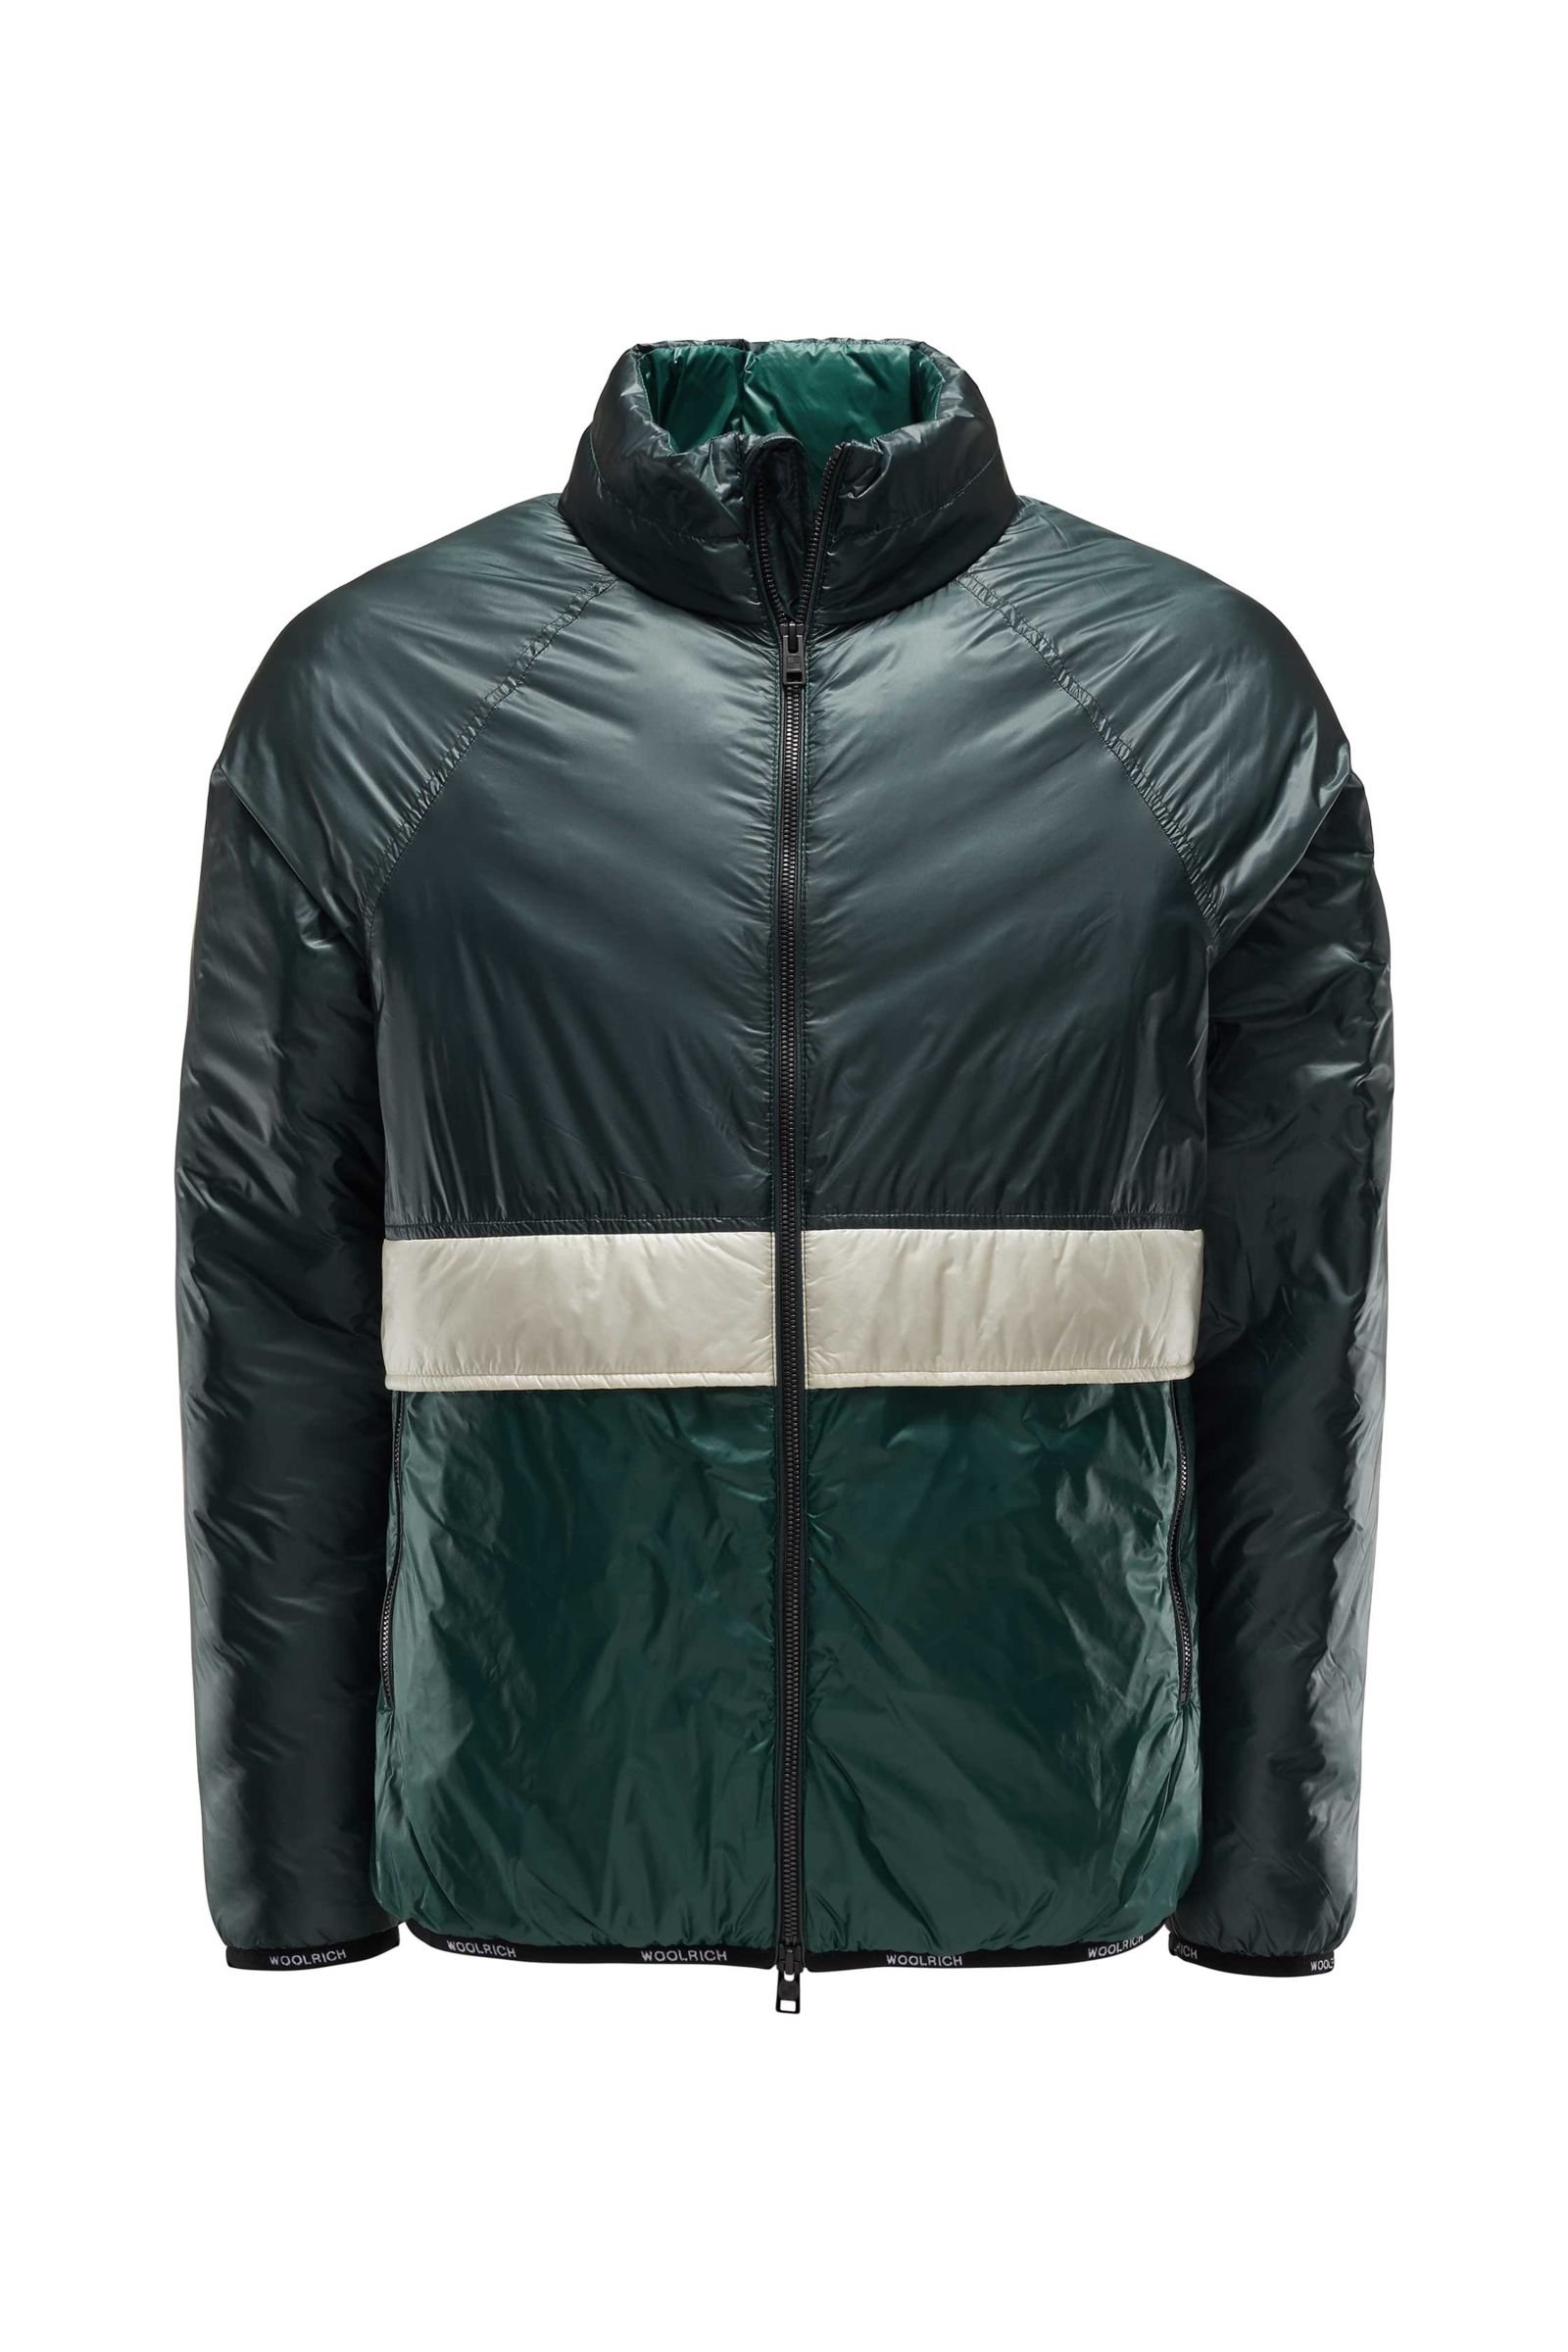 Jacket 'Pack-it Jacket' dark green/off-white